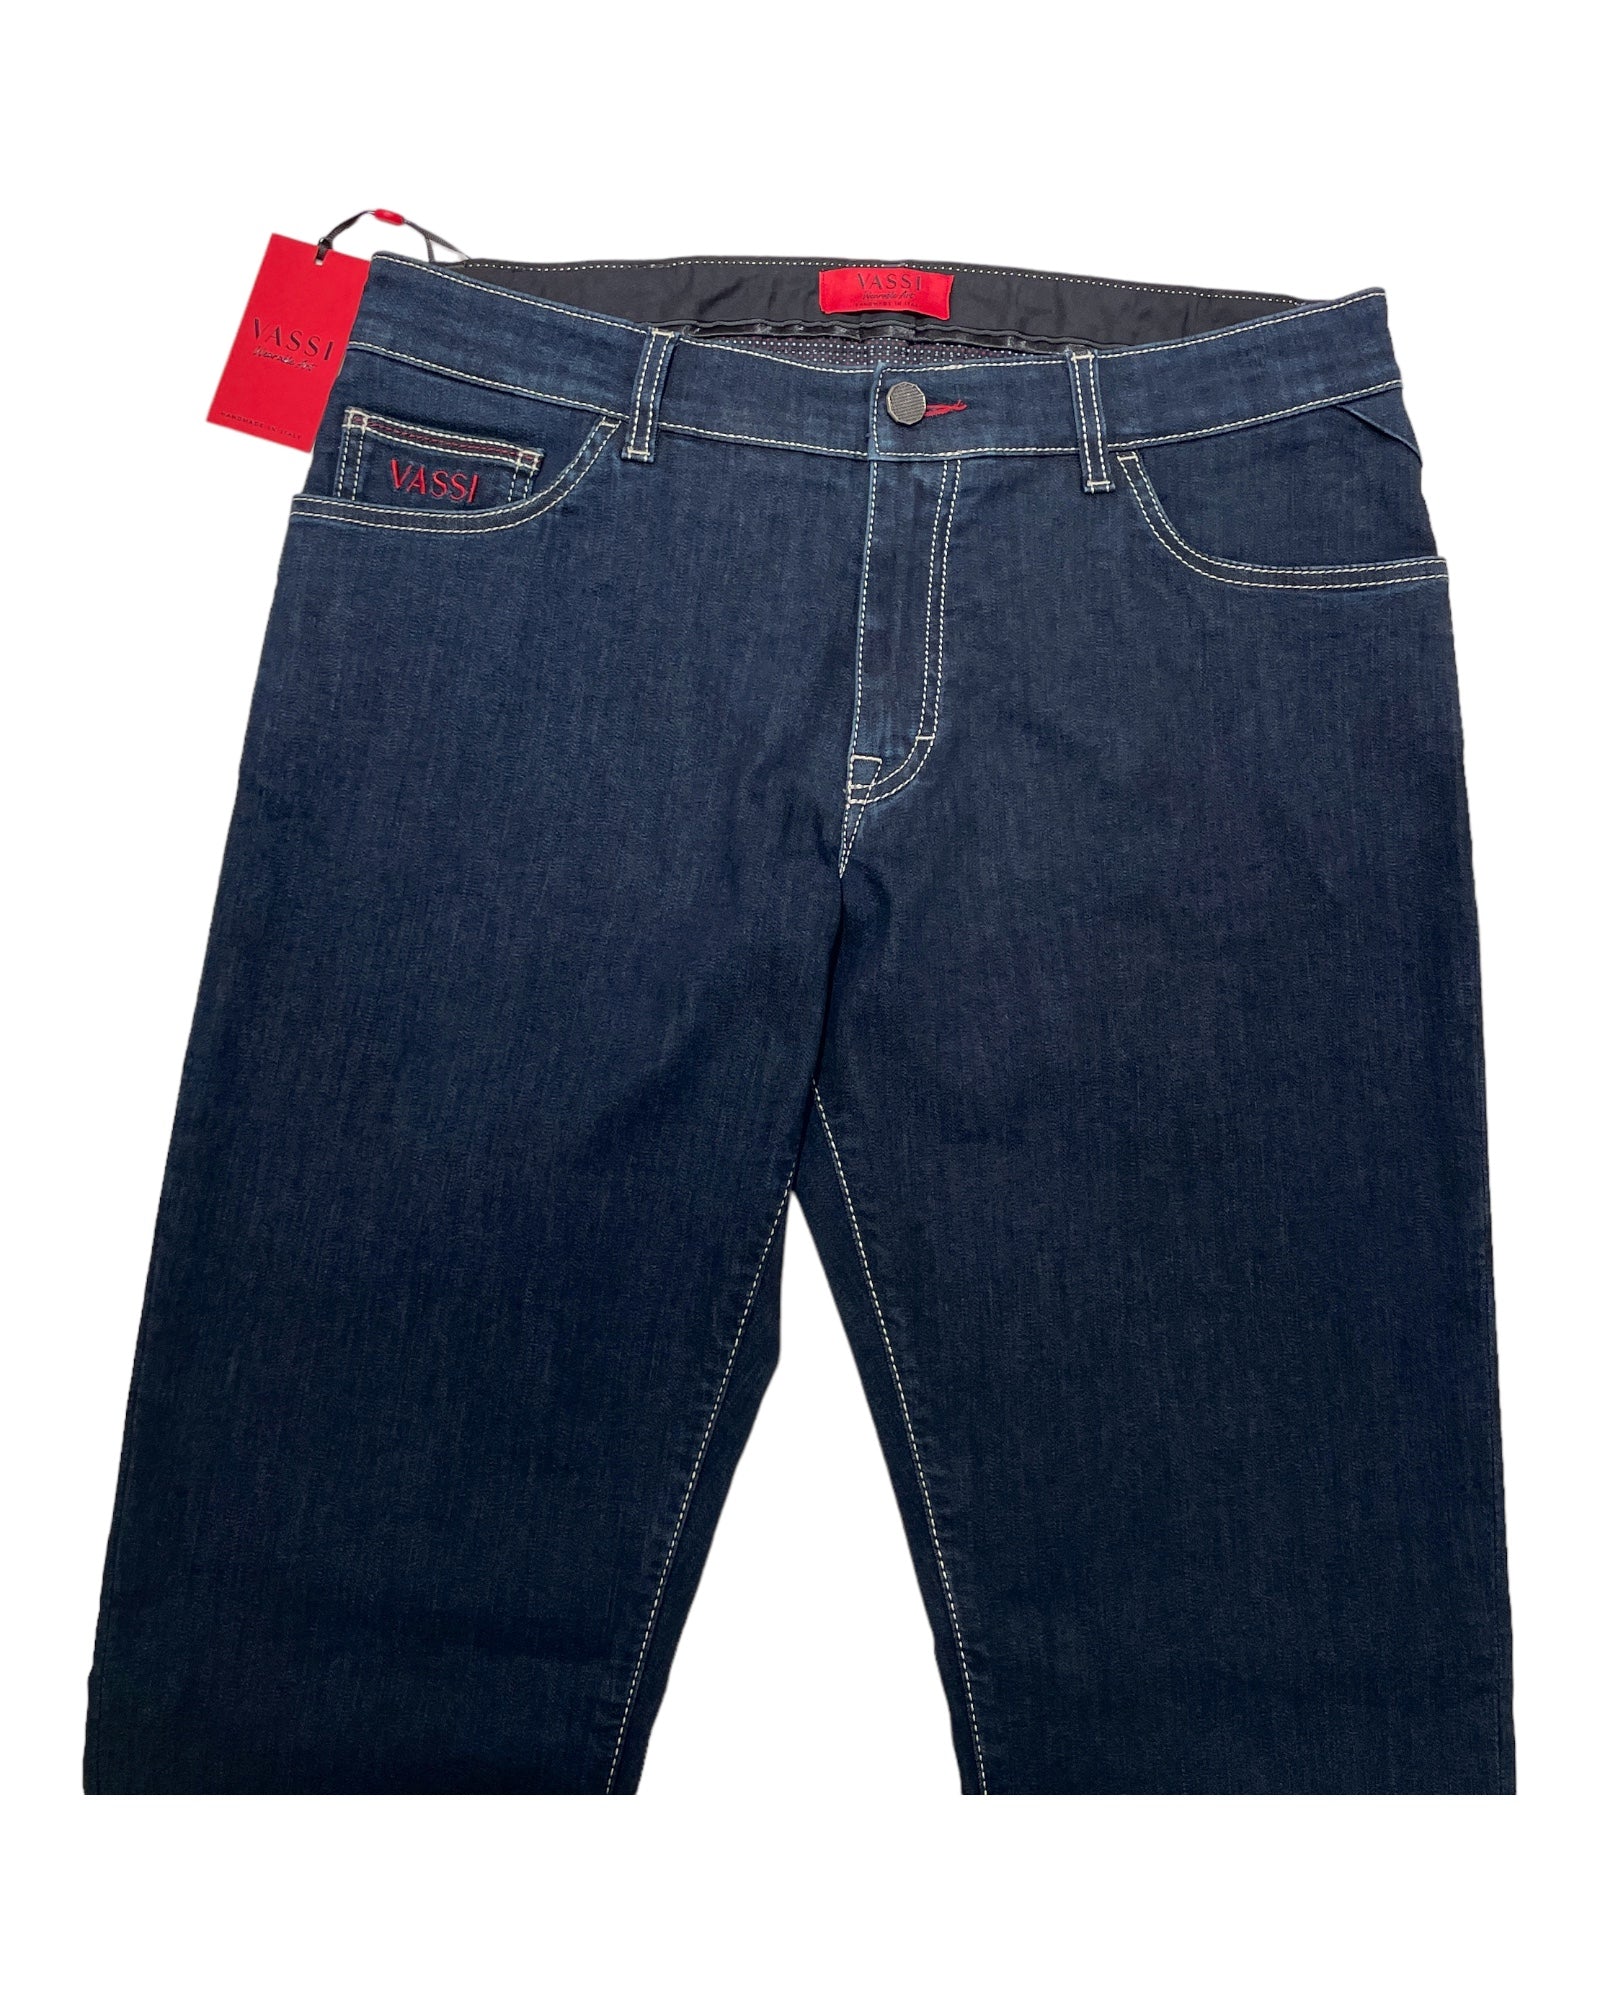 Stretch Japanese Denim Jeans - Dark Blue CASUAL PANTS50